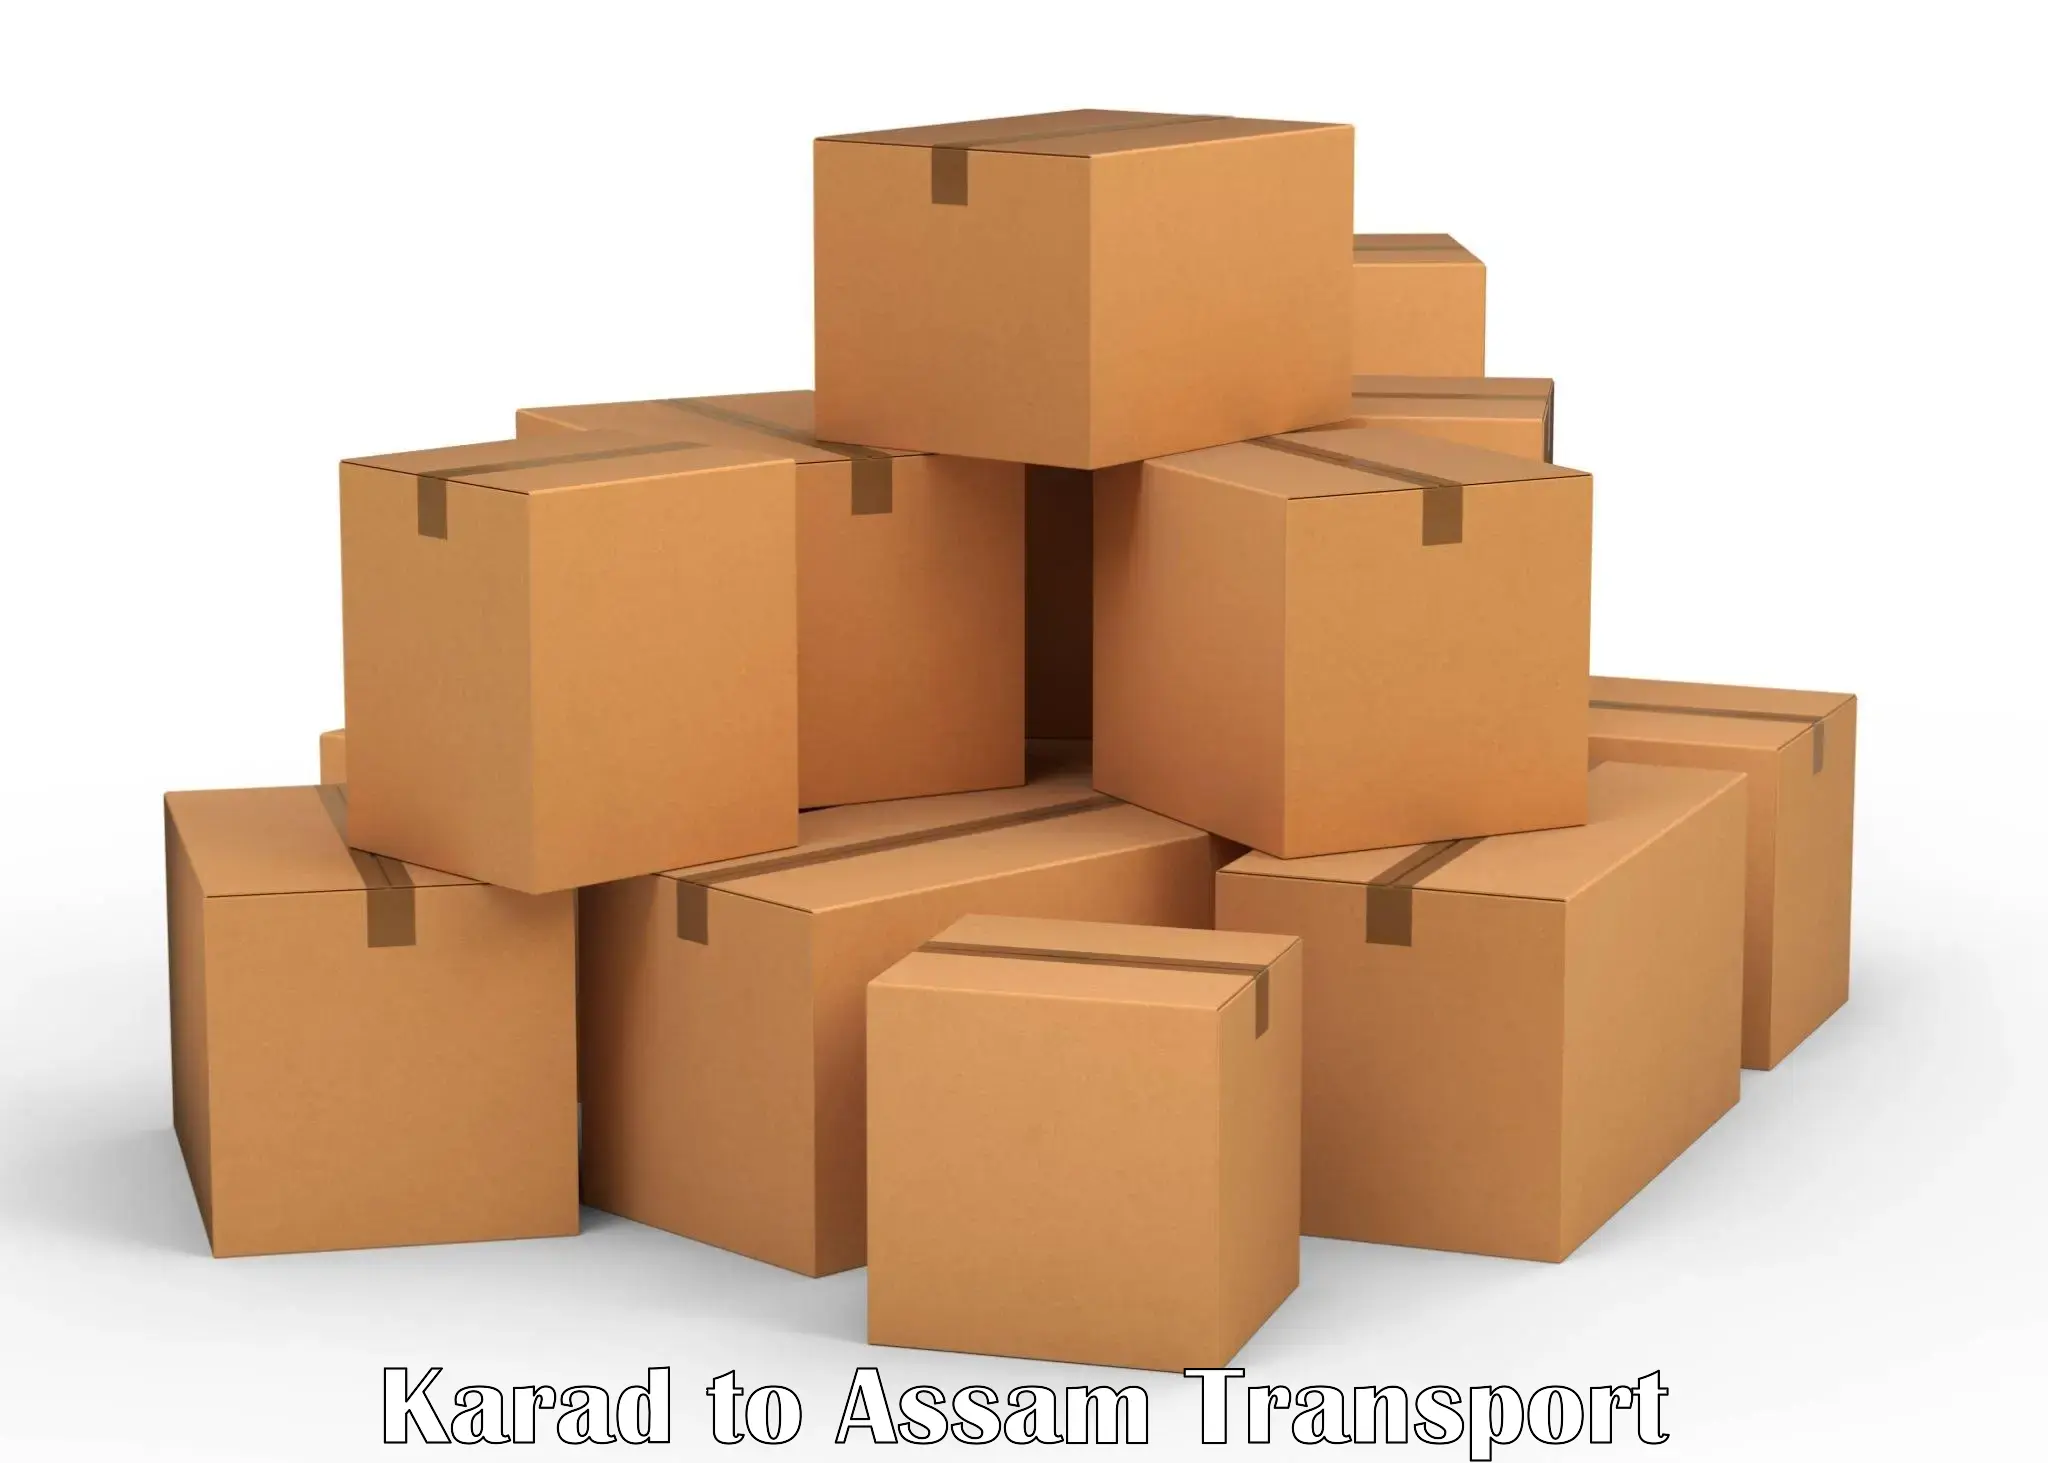 Shipping partner Karad to Tezpur University